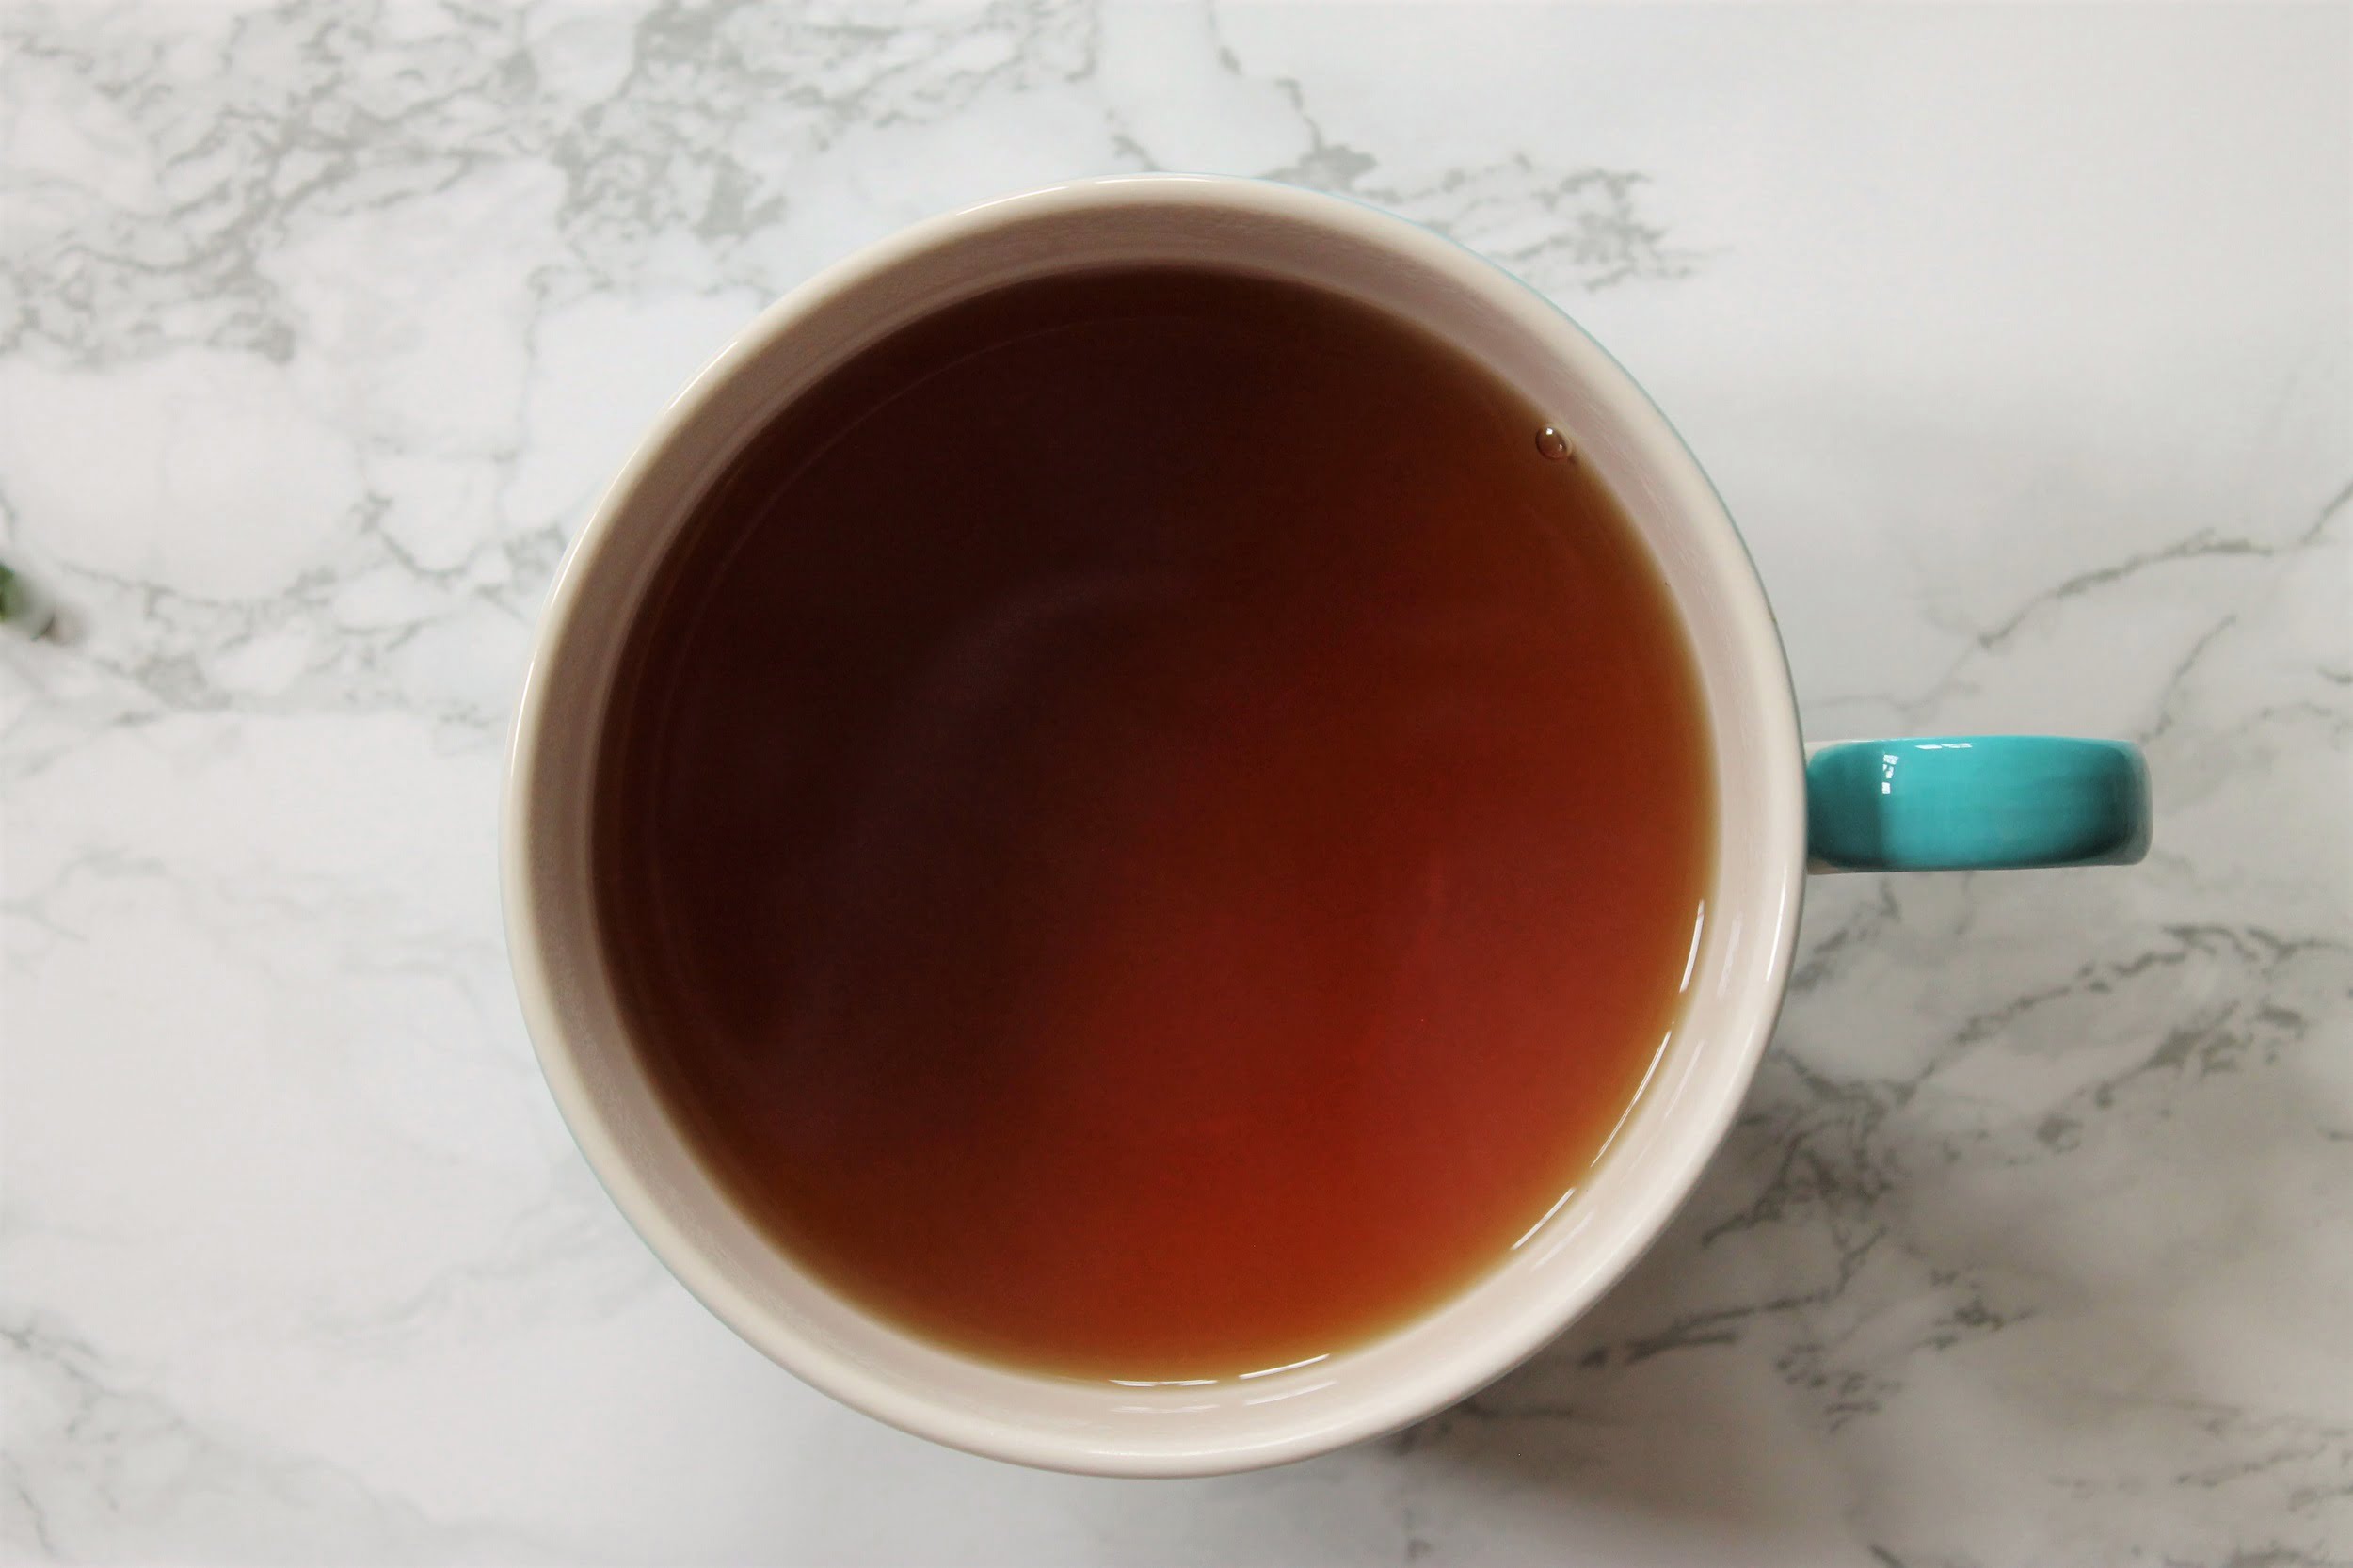 india darjeeling tea in teacup